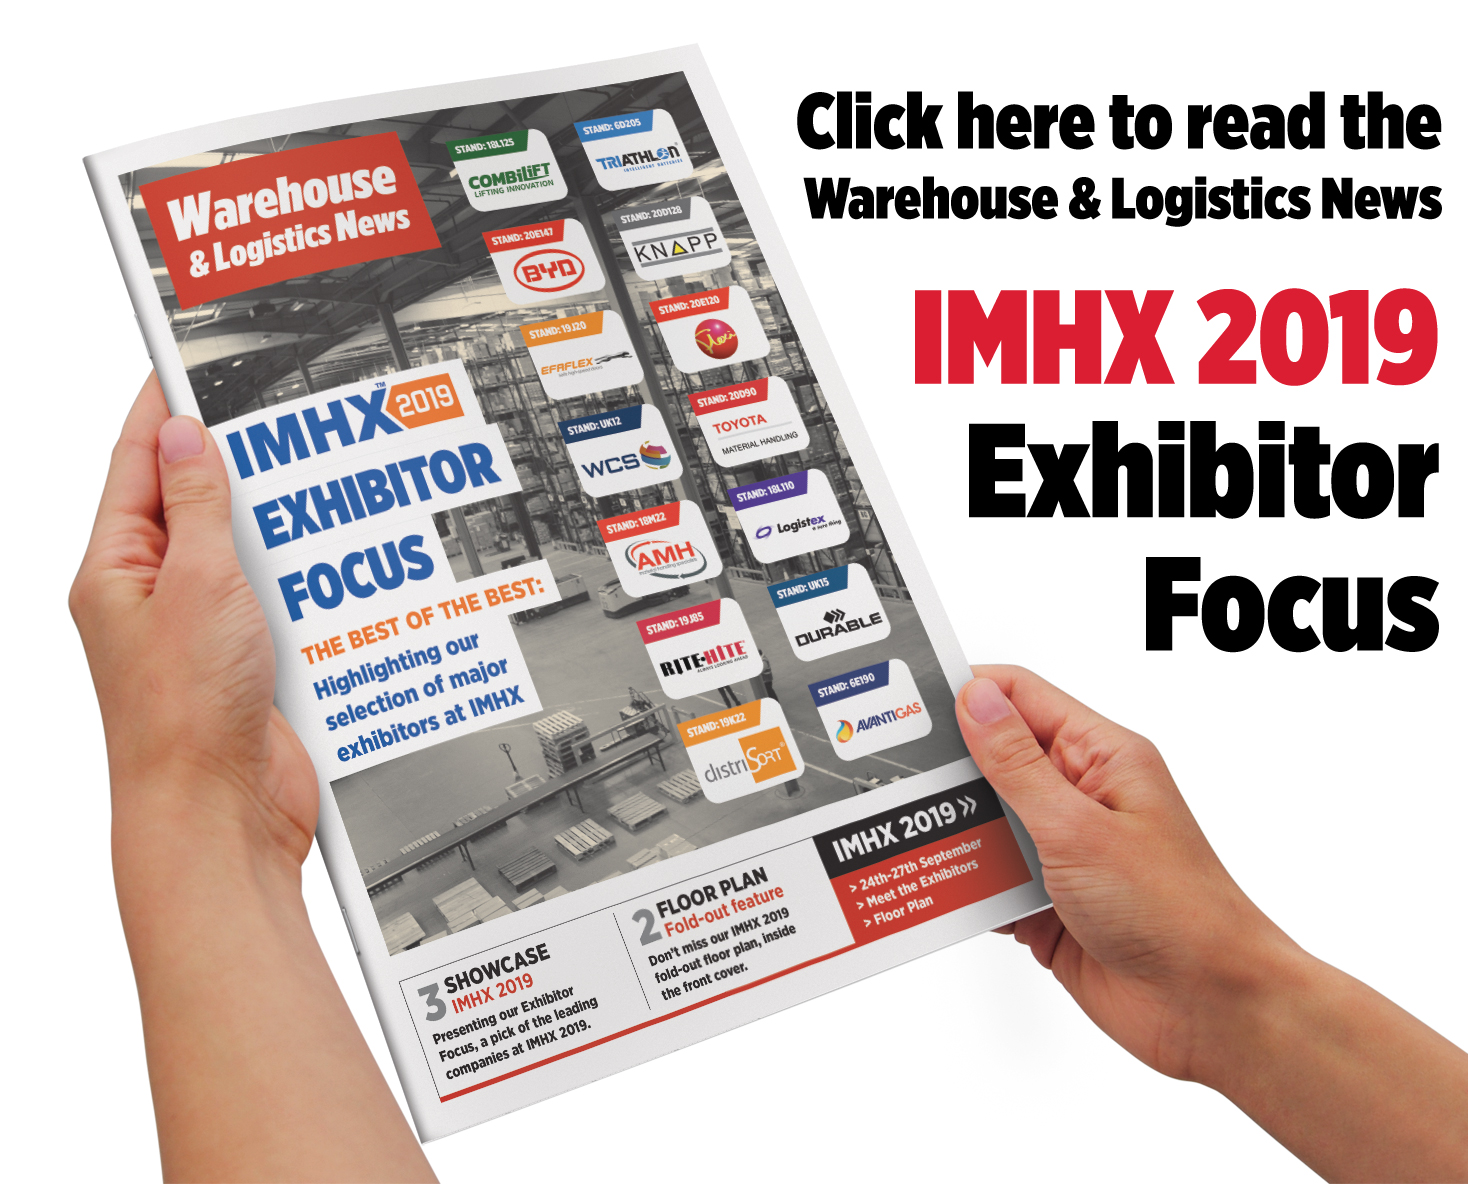 IMHX 2019 Exhibitor Focus Warehouse & Logistics News